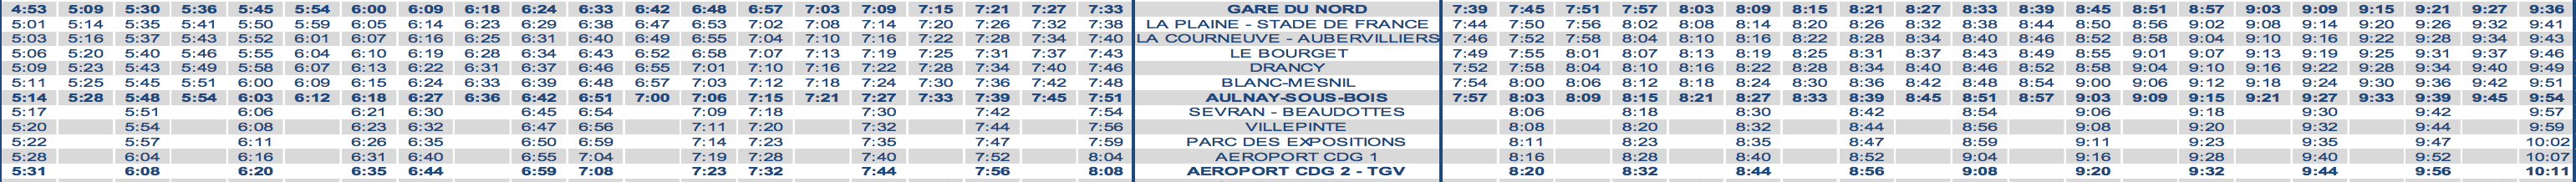 RER B Train Timetable Paris to CDG Midday Weekend 2020 Strike